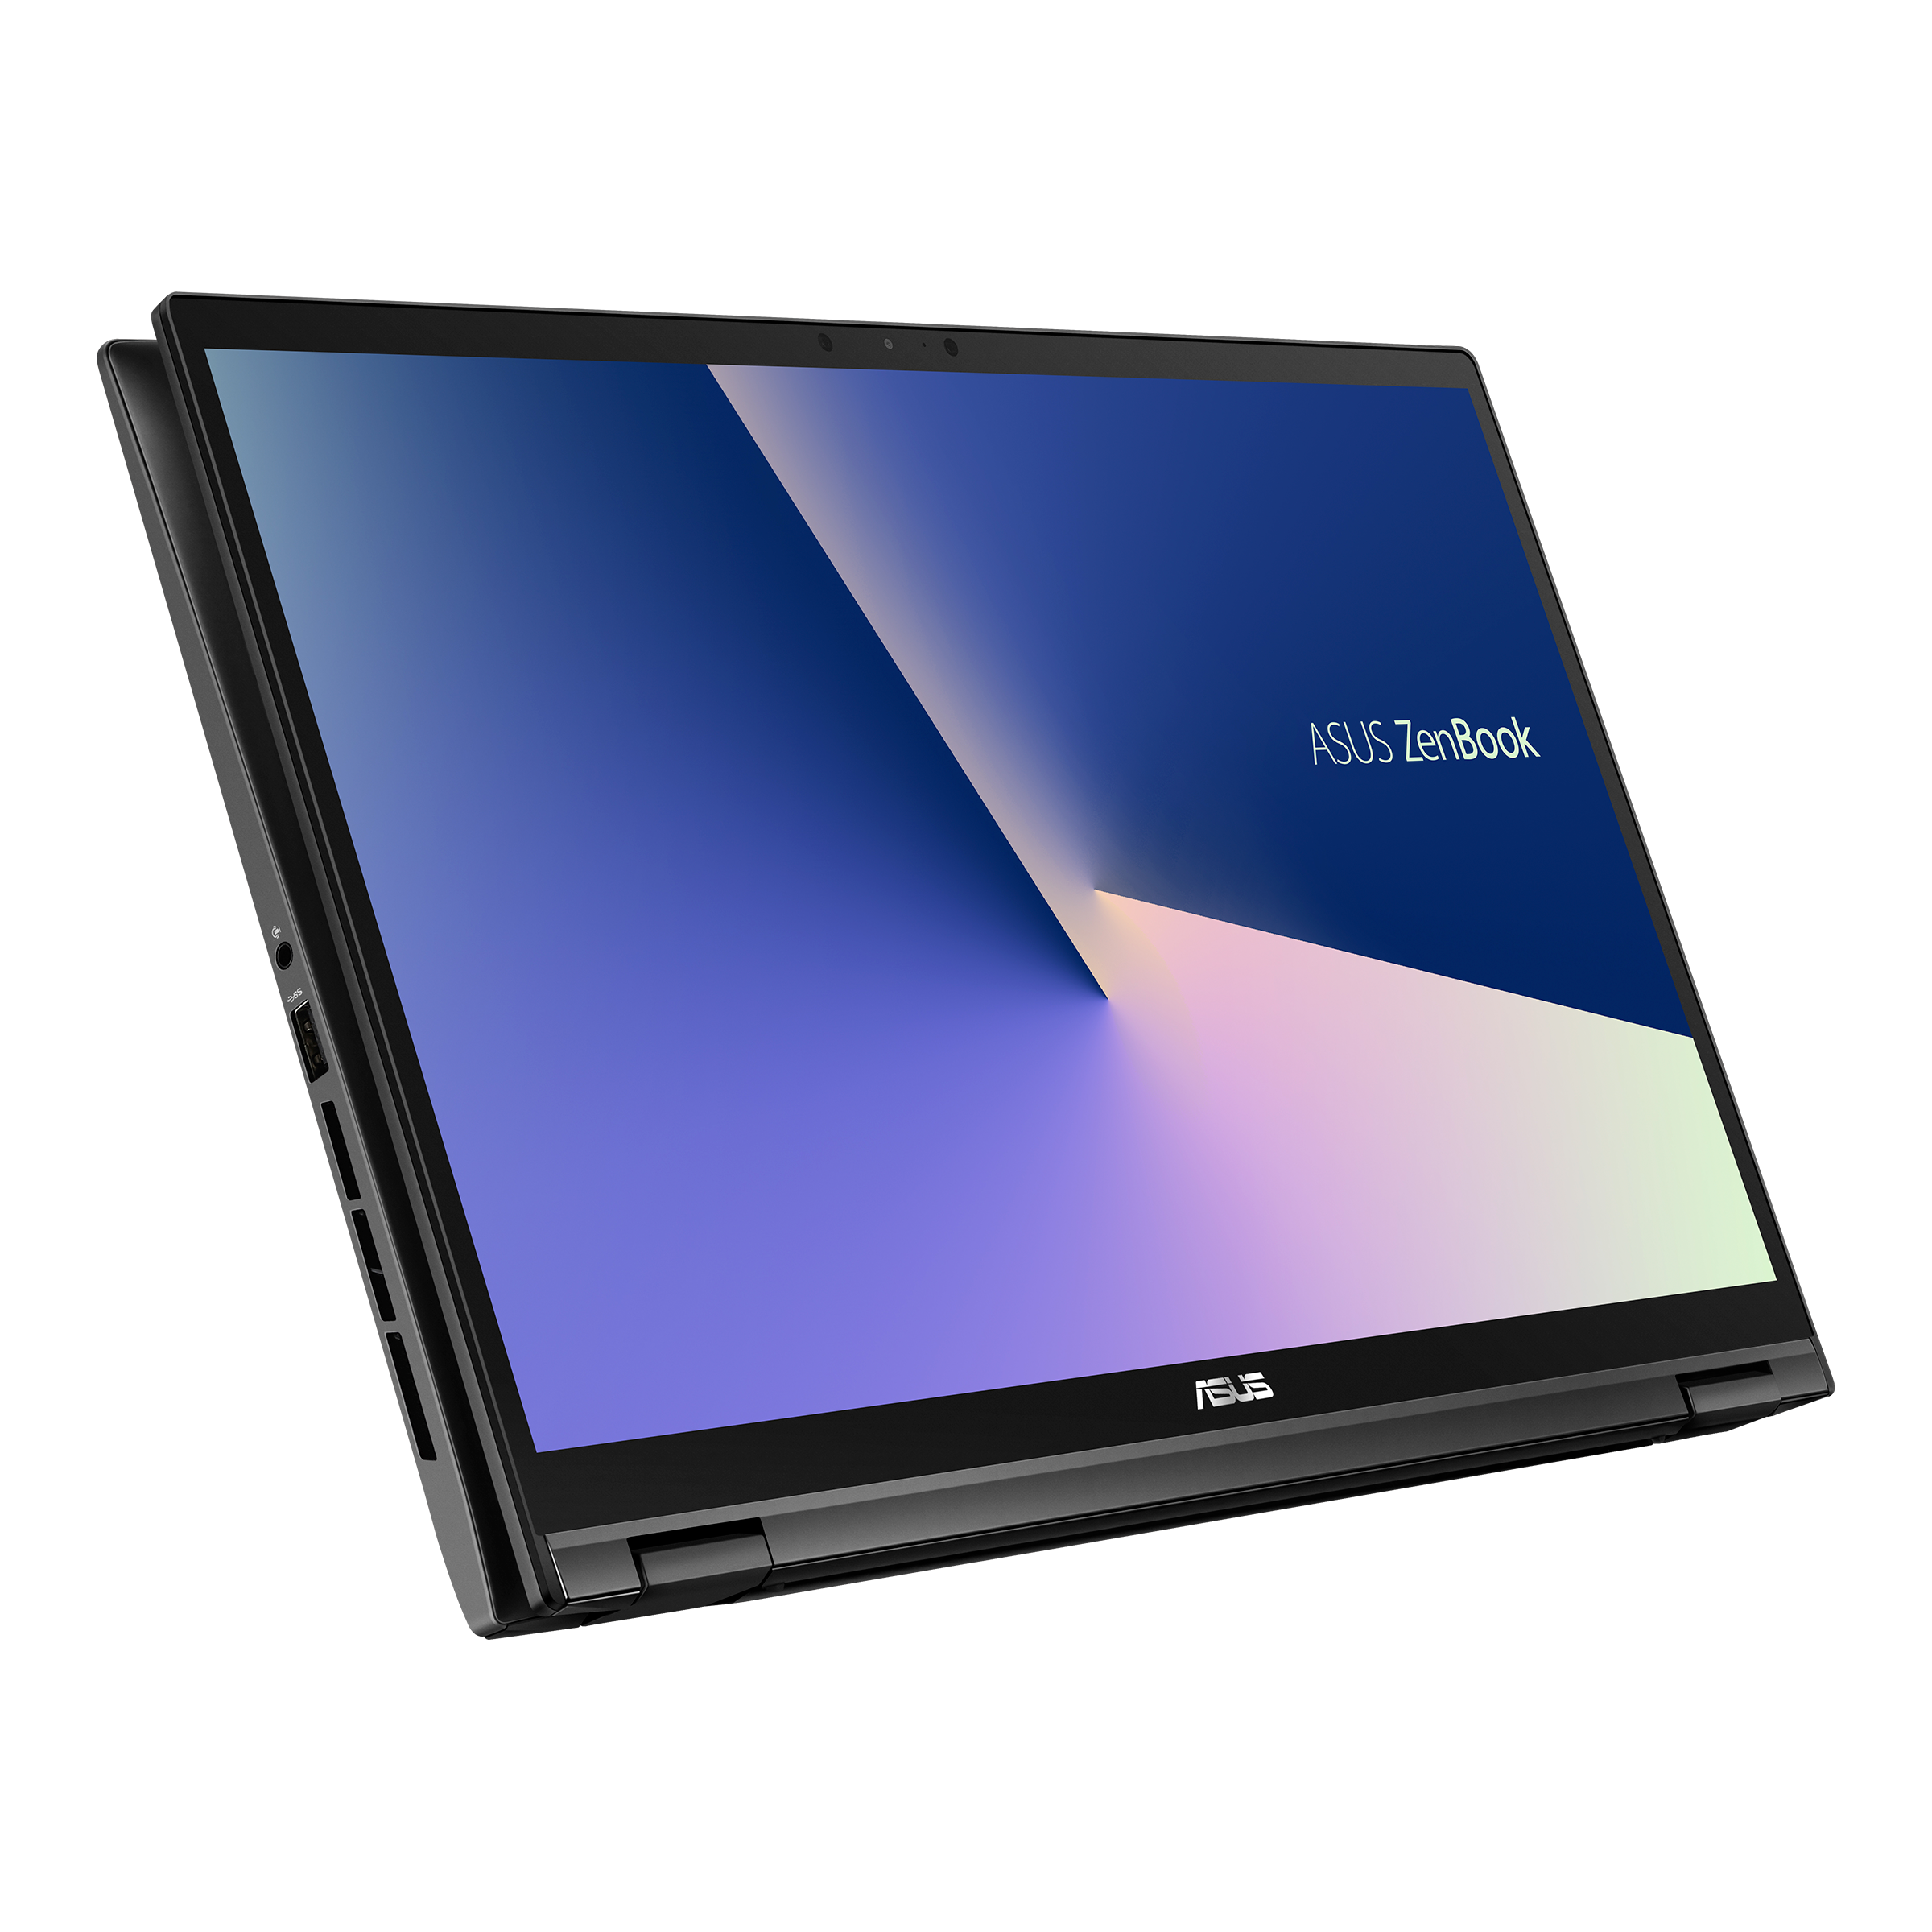 Zenbook Flip S UX370｜Laptops For Home｜ASUS Global